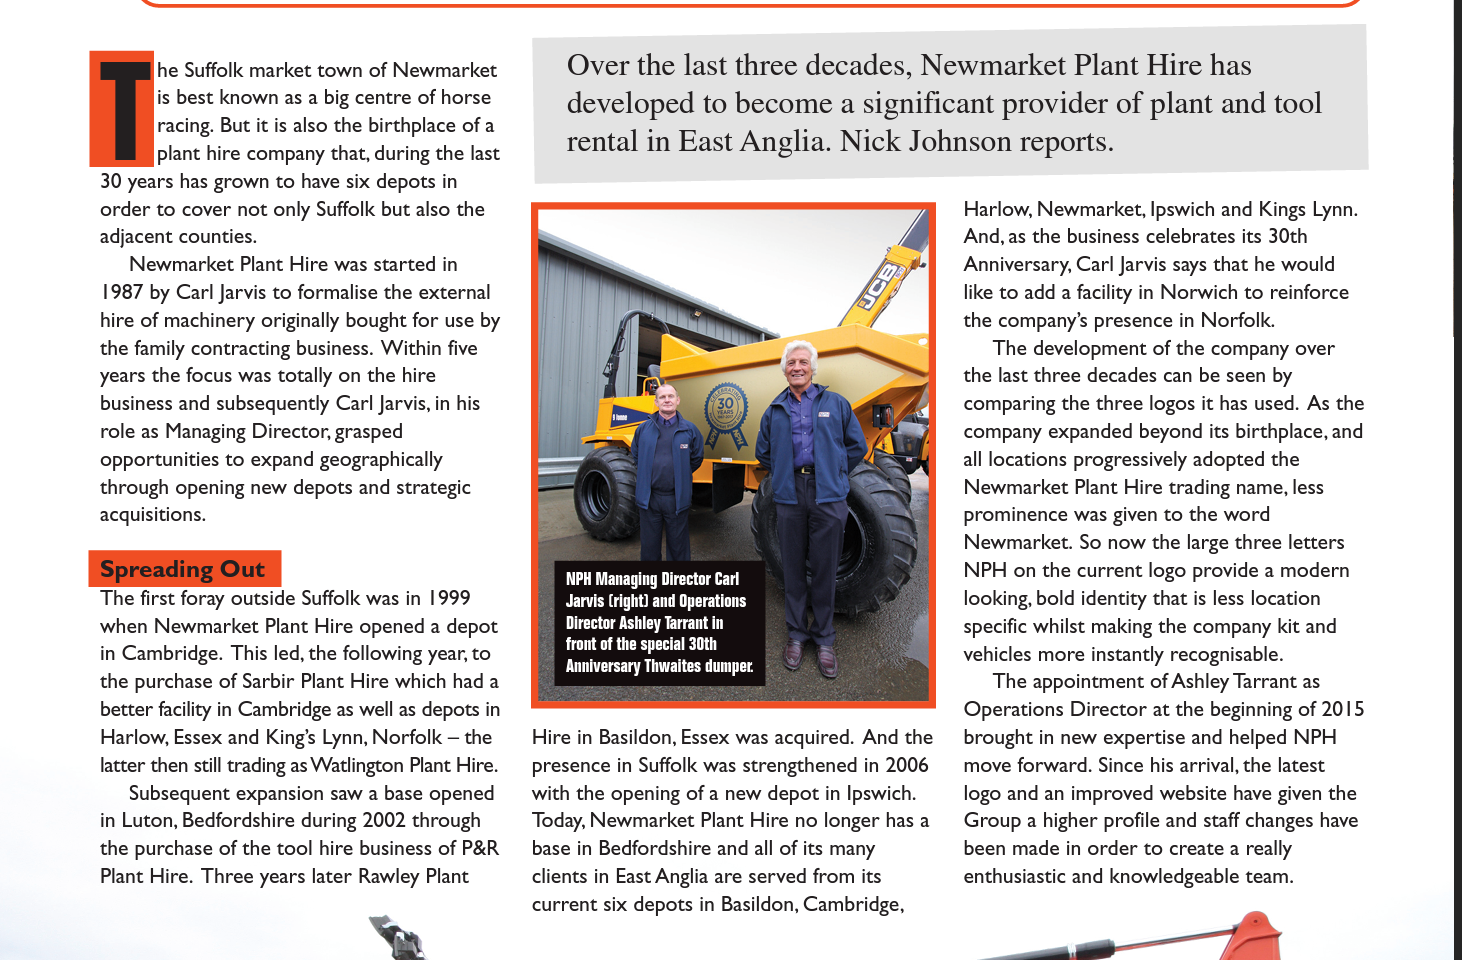 NPH Feature in Construction Plant News Magazine